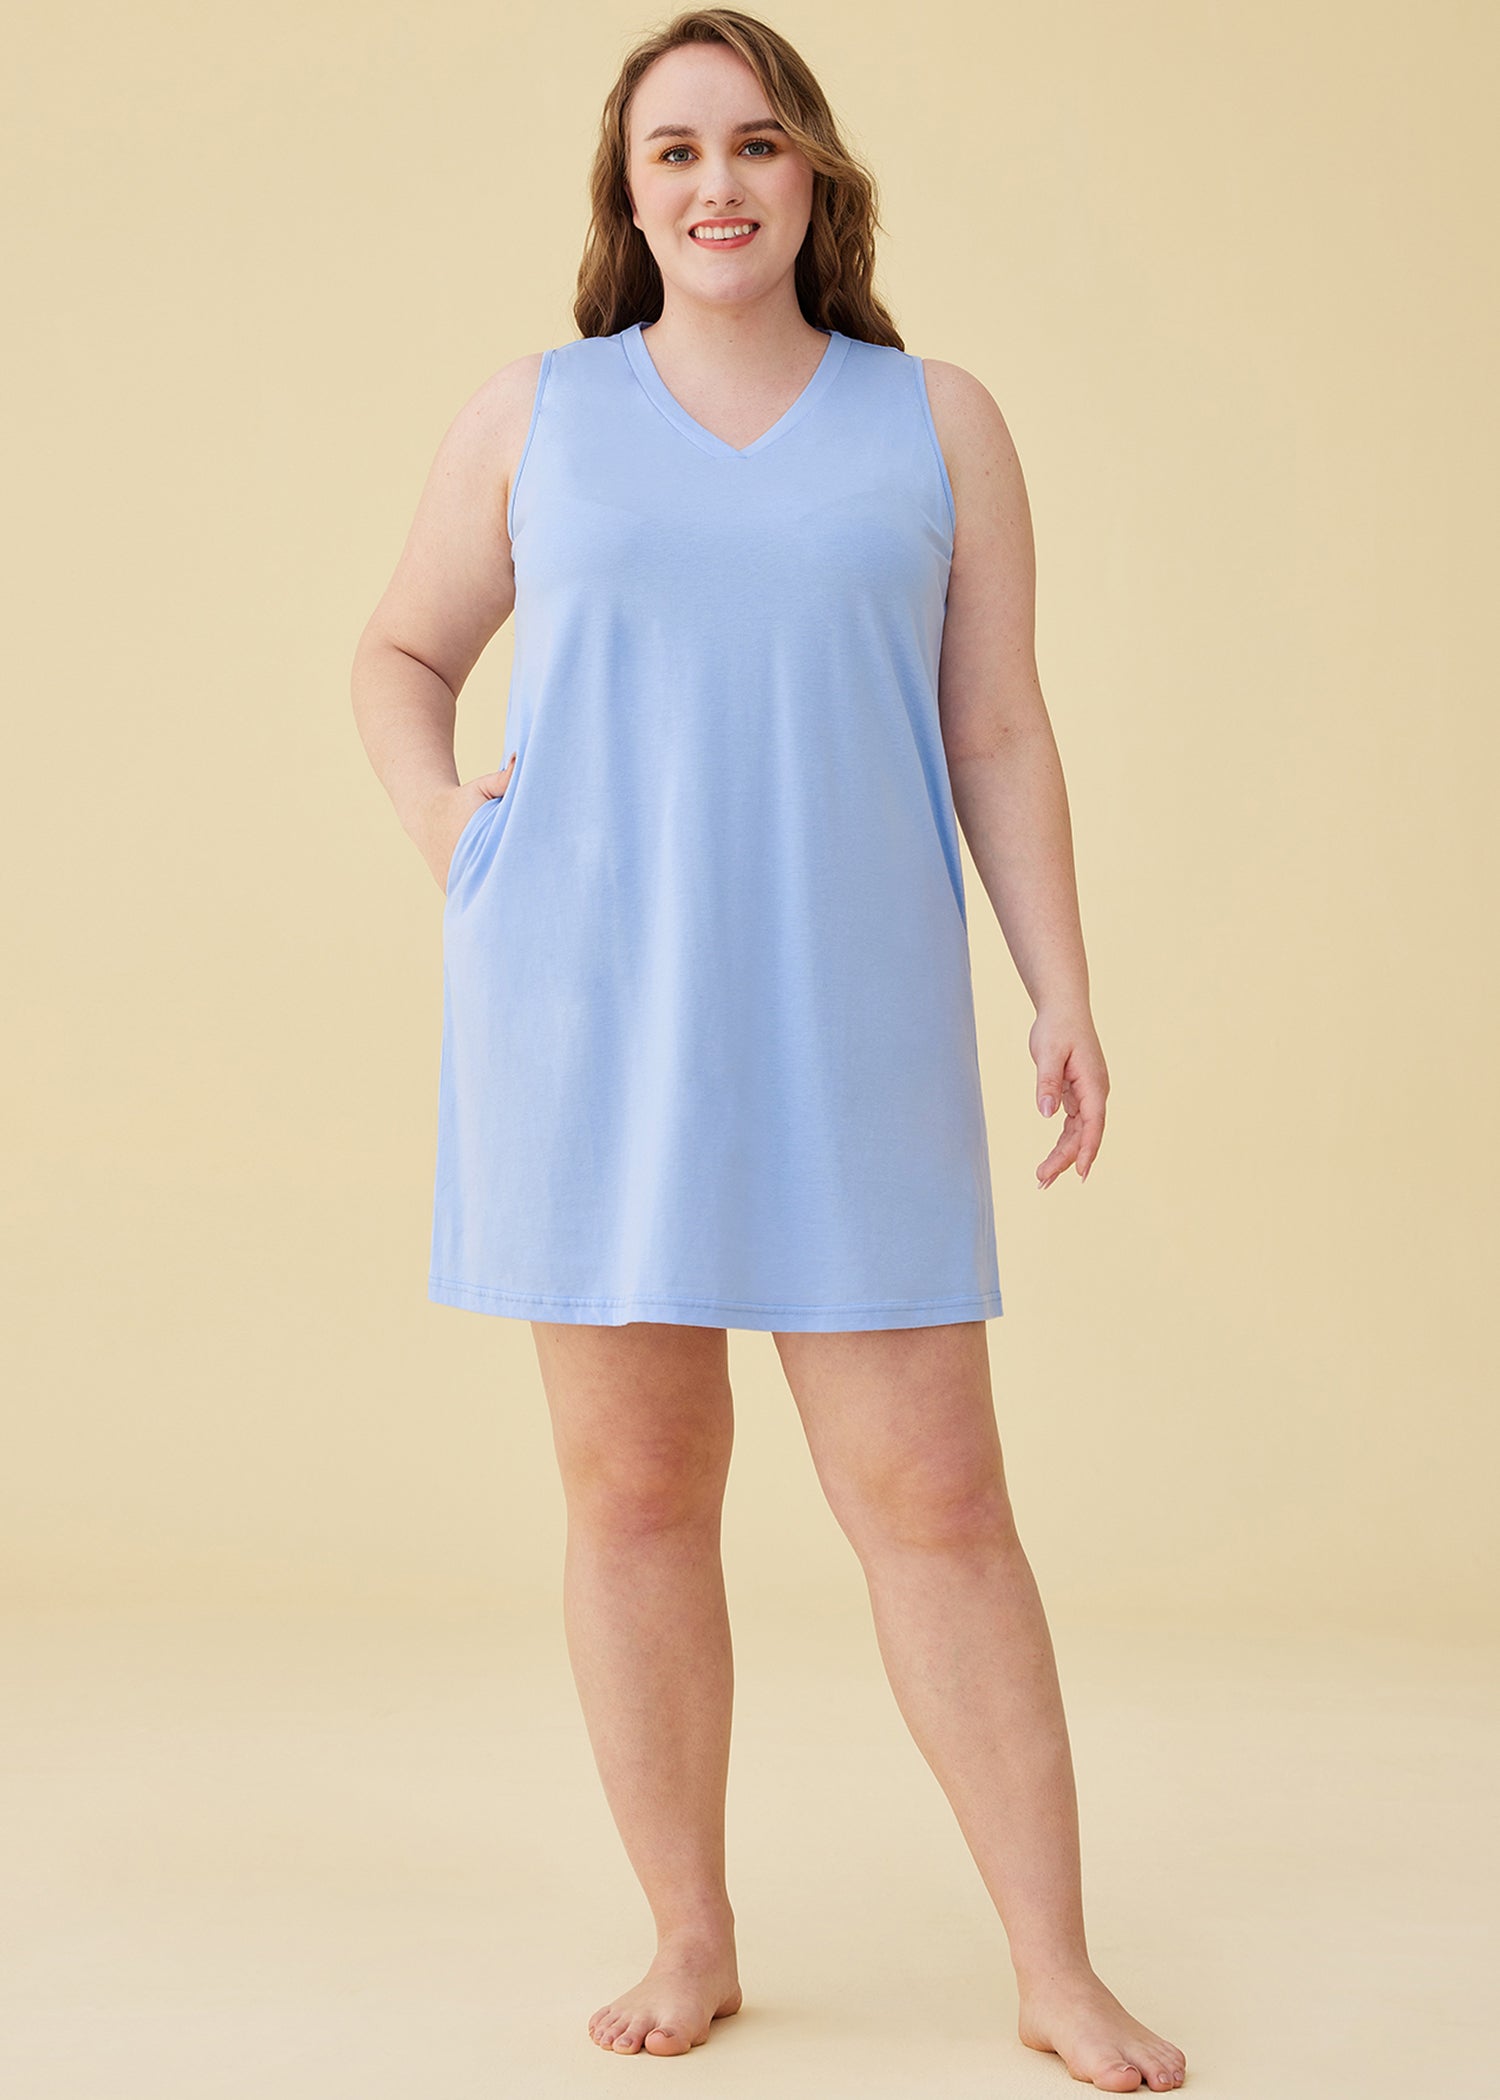 Women's Sleeveless Nightgowns Dotted Printed Sleepdress Comfy Casual Plus  Size Pajamas Sleepwear Full Slip Lace Nightdress, Blue 3XL 